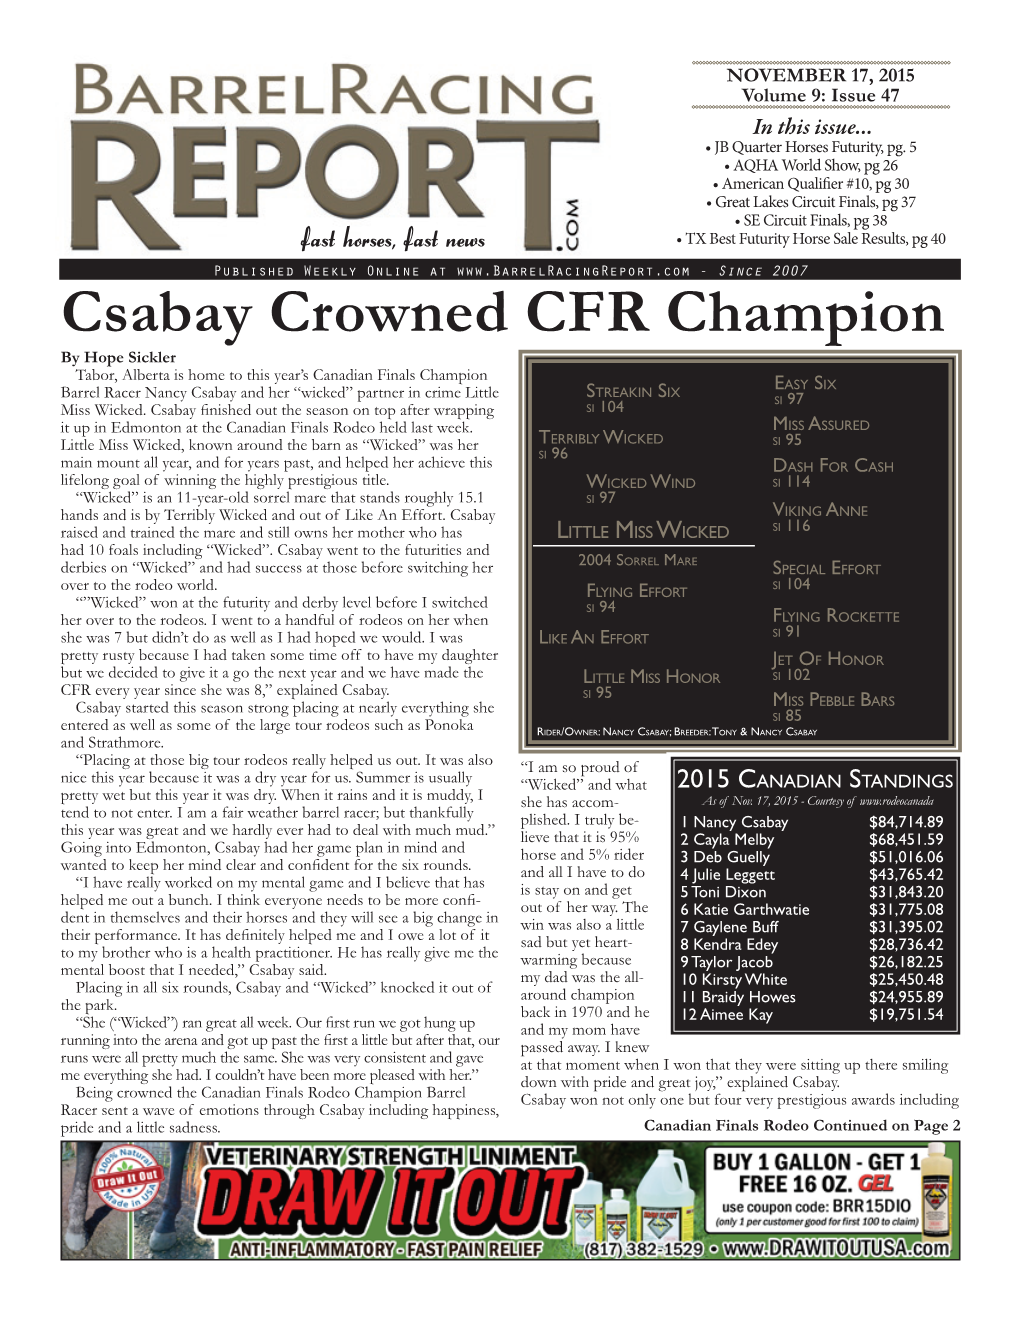 Csabay Crowned Cfr Champion